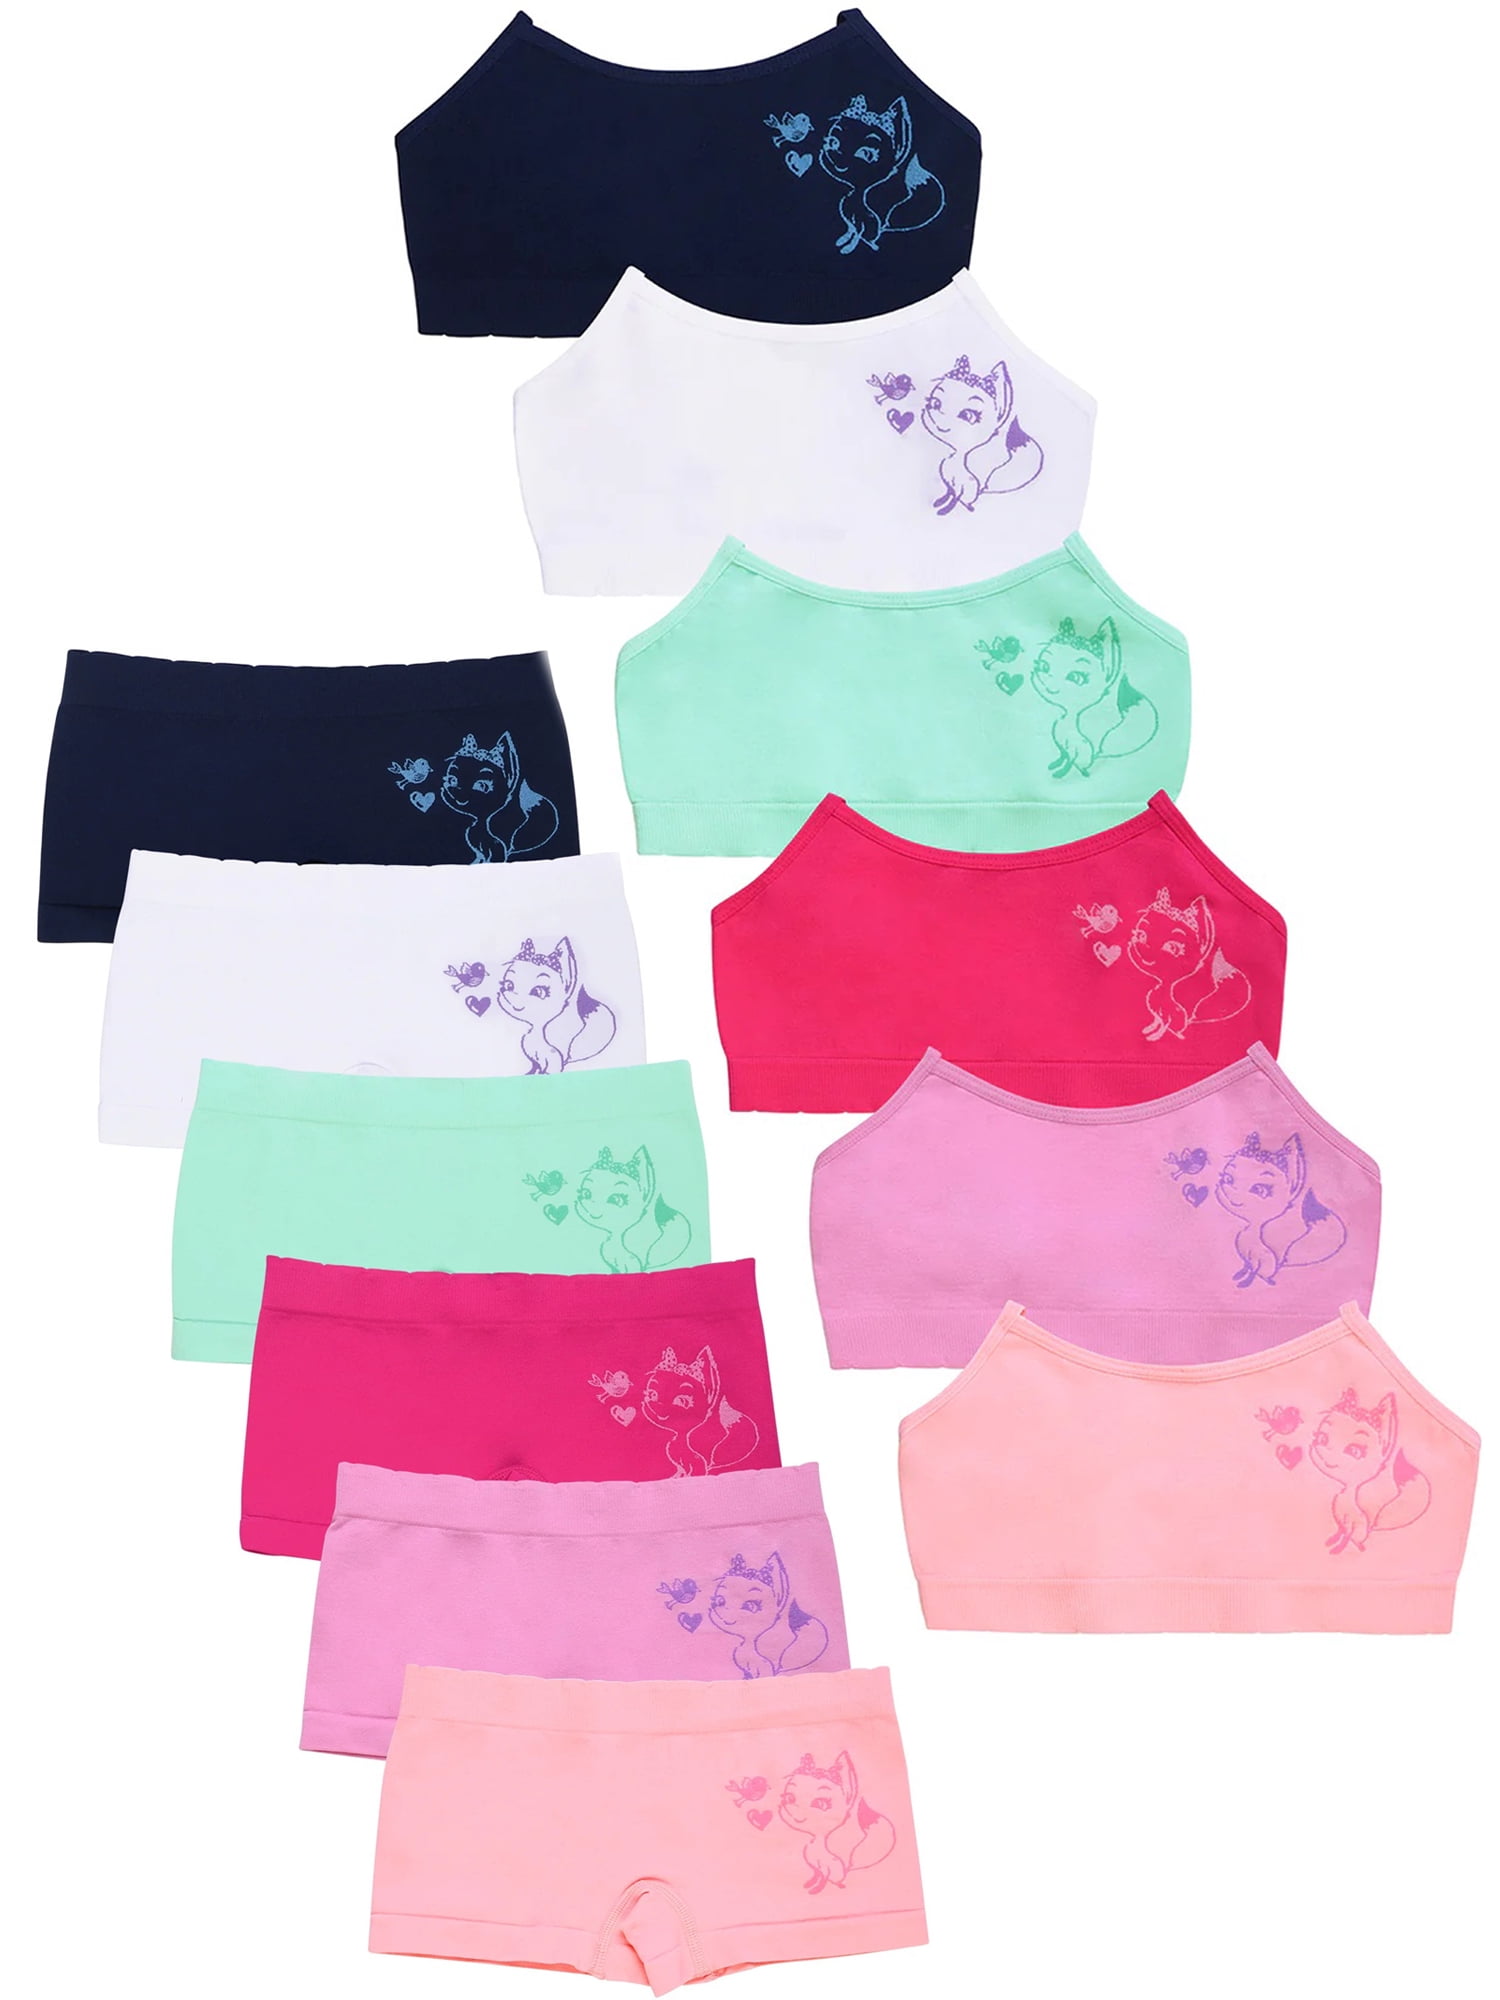 Bra for Girls 7-12 years Underwear Tops for Teens Cotton Kids Girl